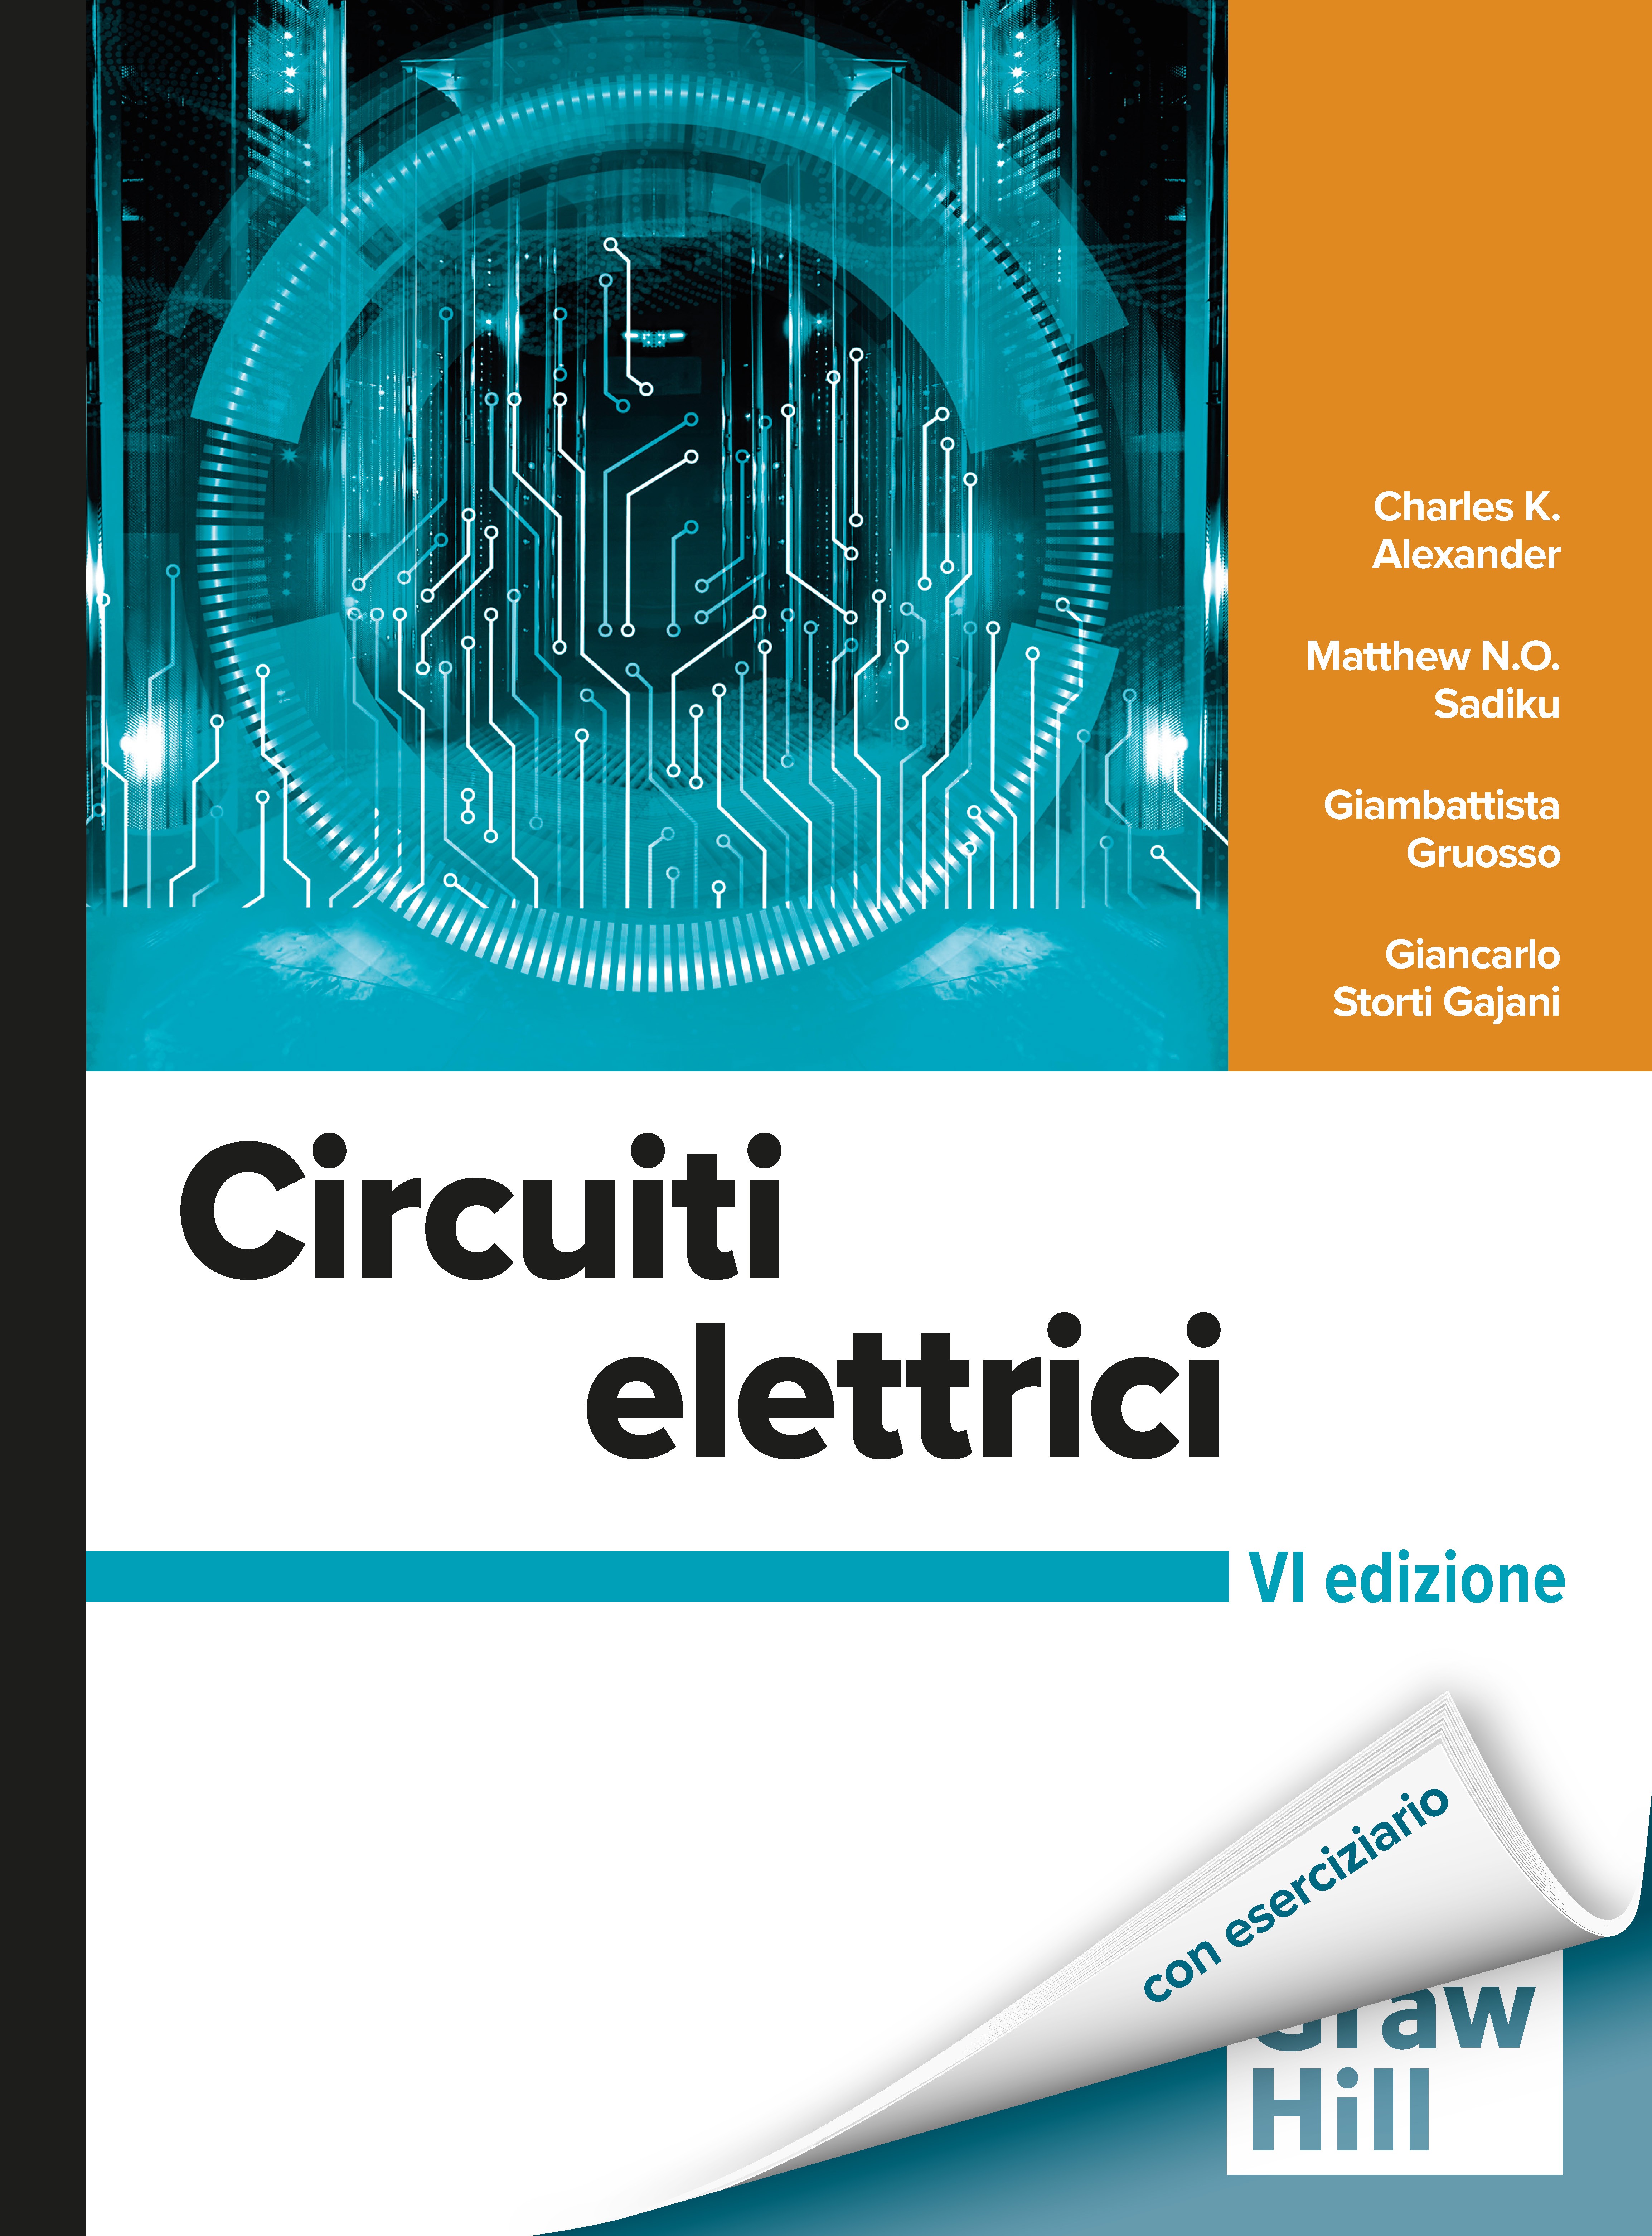 Circuiti elettrici 6/ed - Librerie.coop